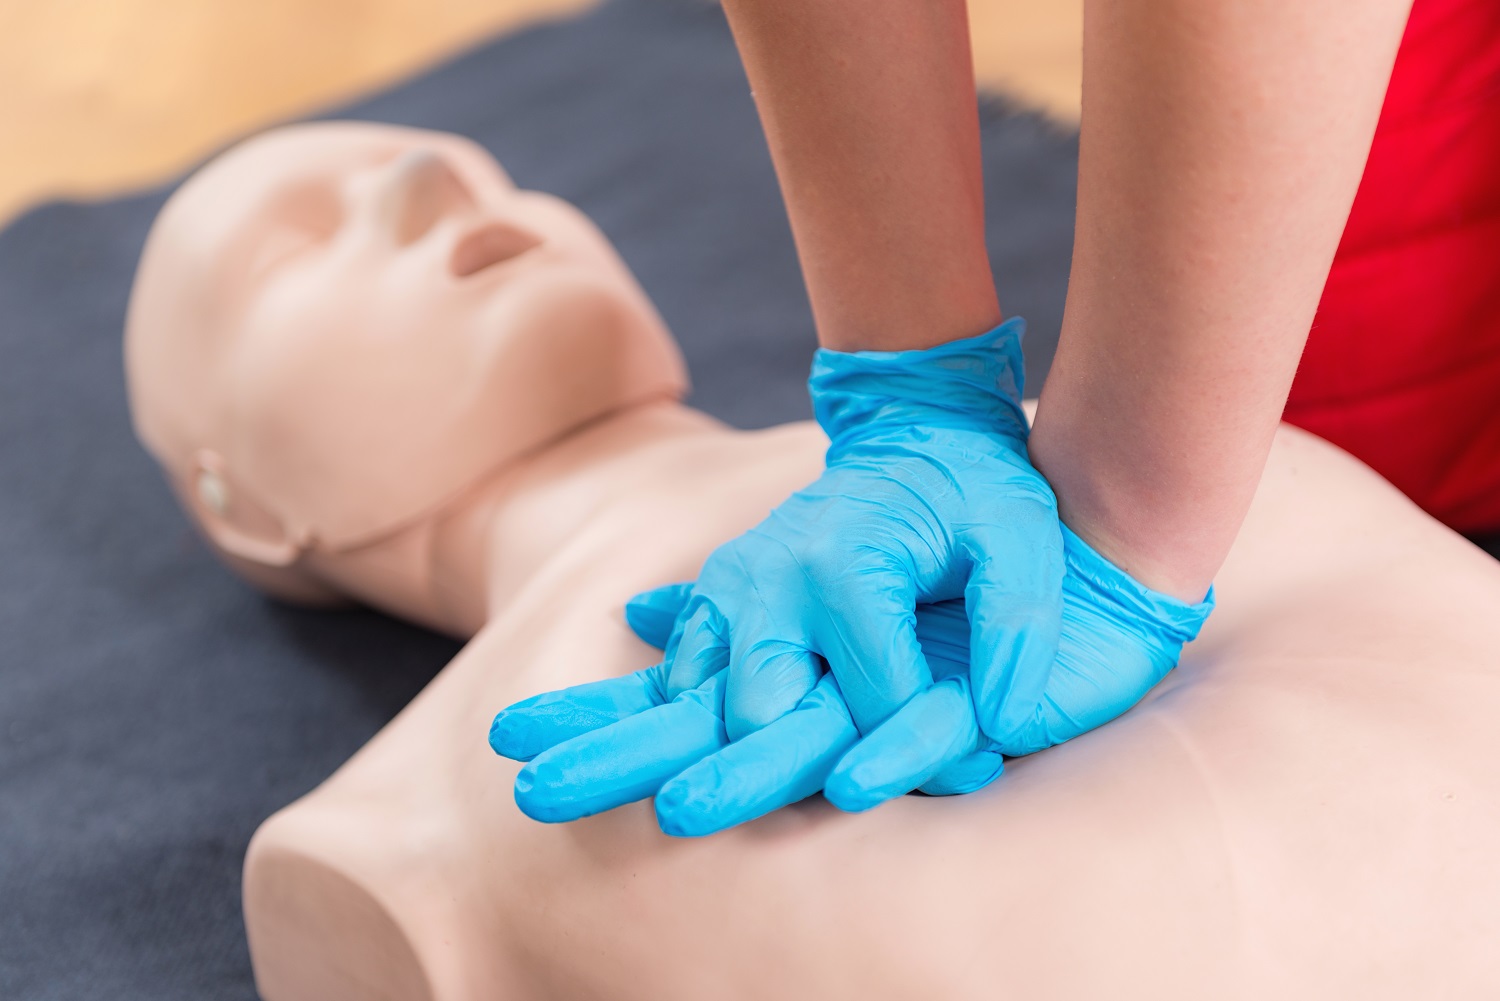 HLTAID009 Provide Cardiopulmonary Resuscitation (CPR)